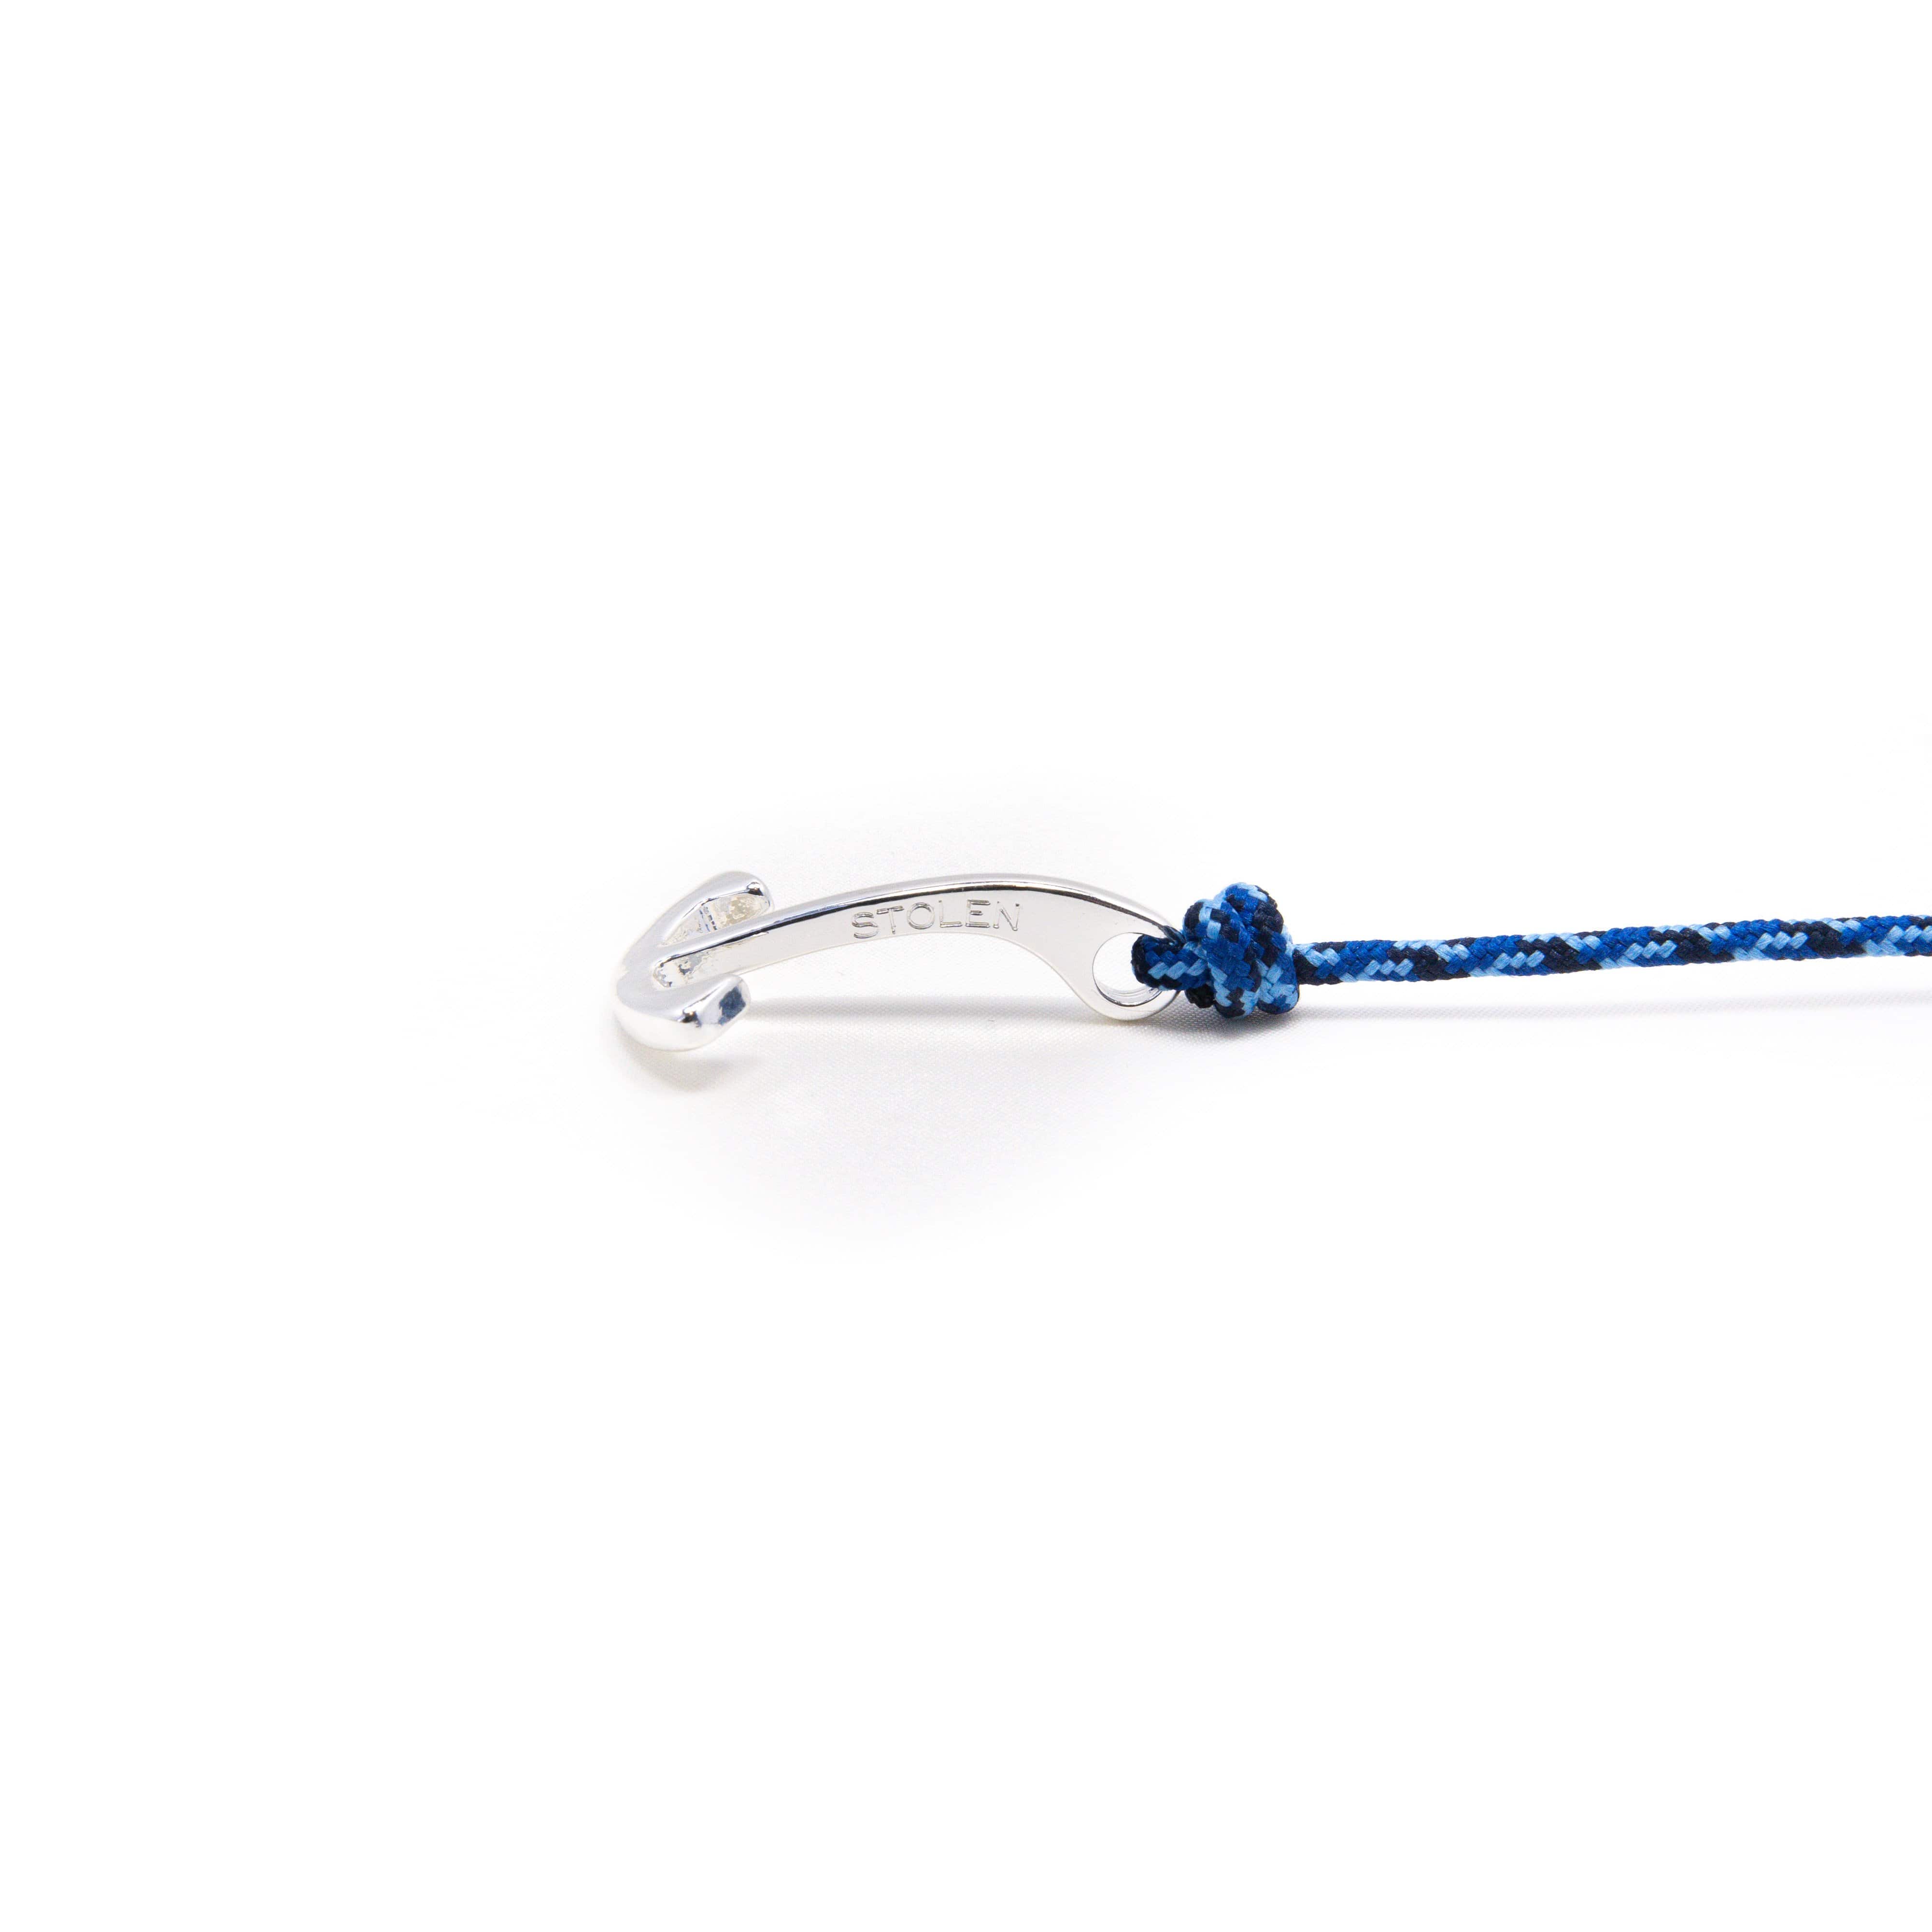 Camo Blue Men's Bracelet With Silver Anchor - Stolen Riches